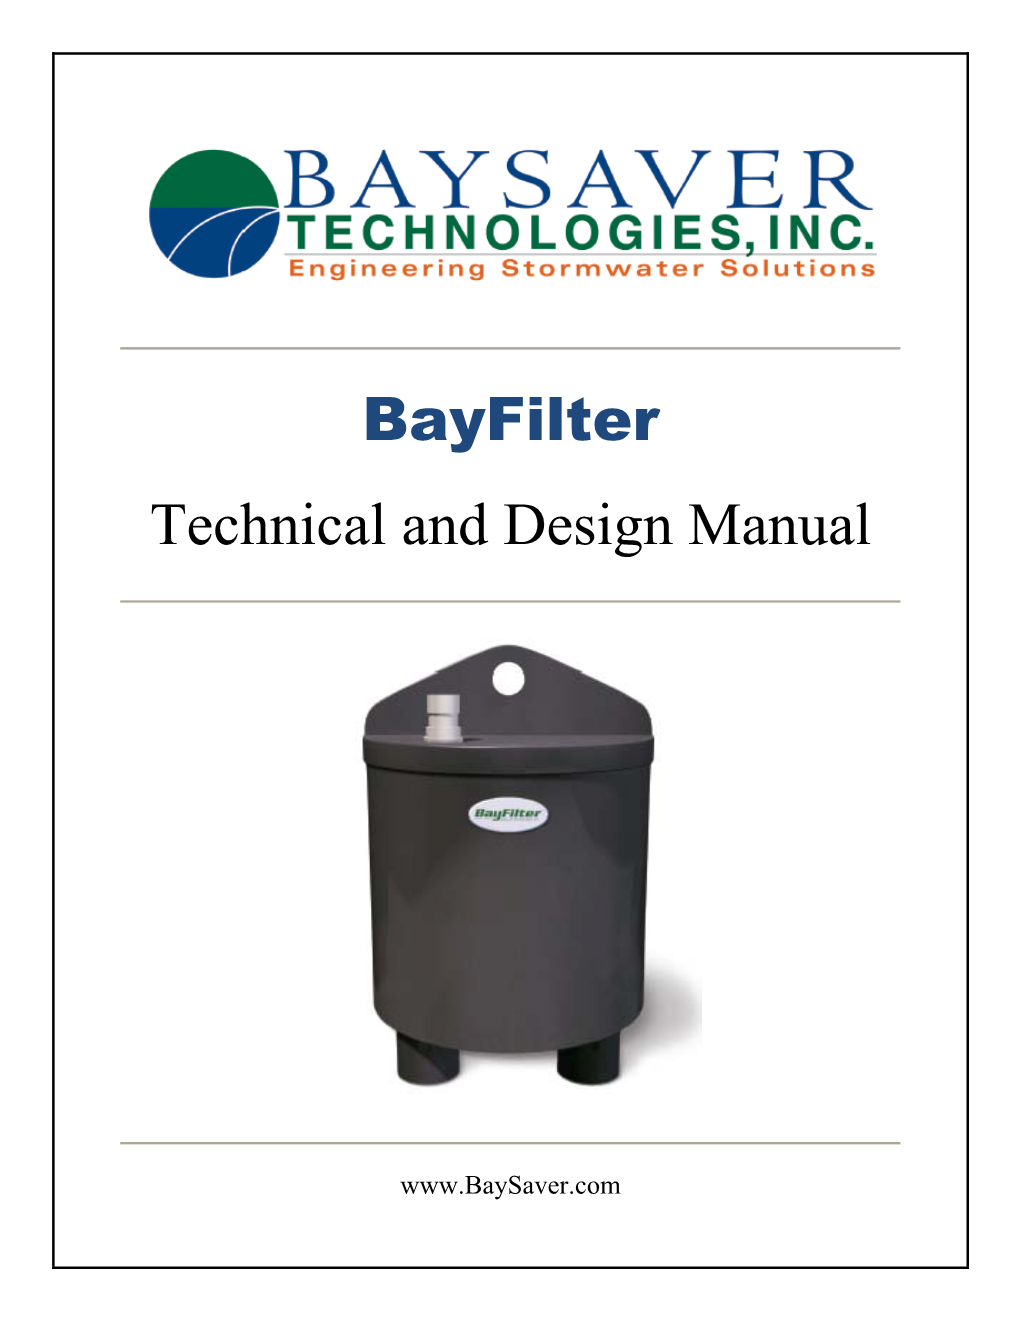 Bayfilter Technical and Design Manual